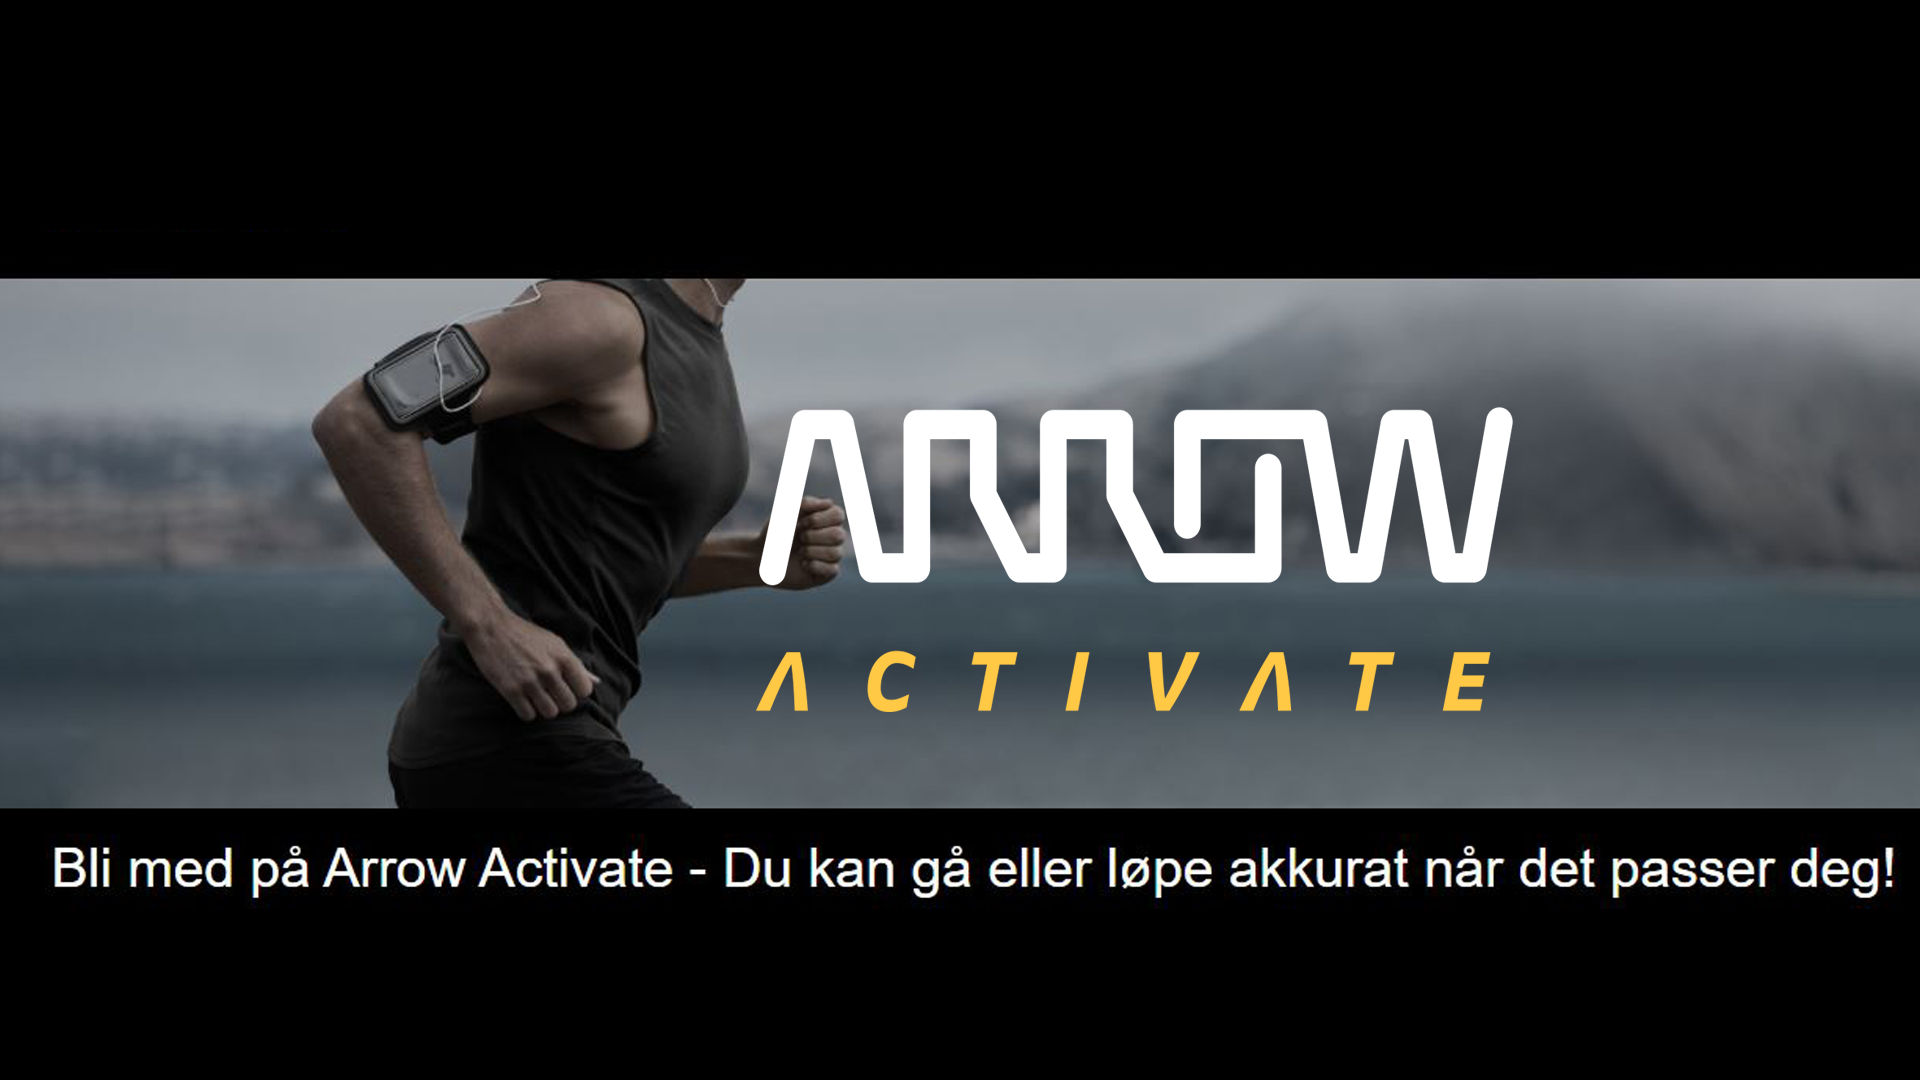 Arrow Activate Norway - Konkurranse #1